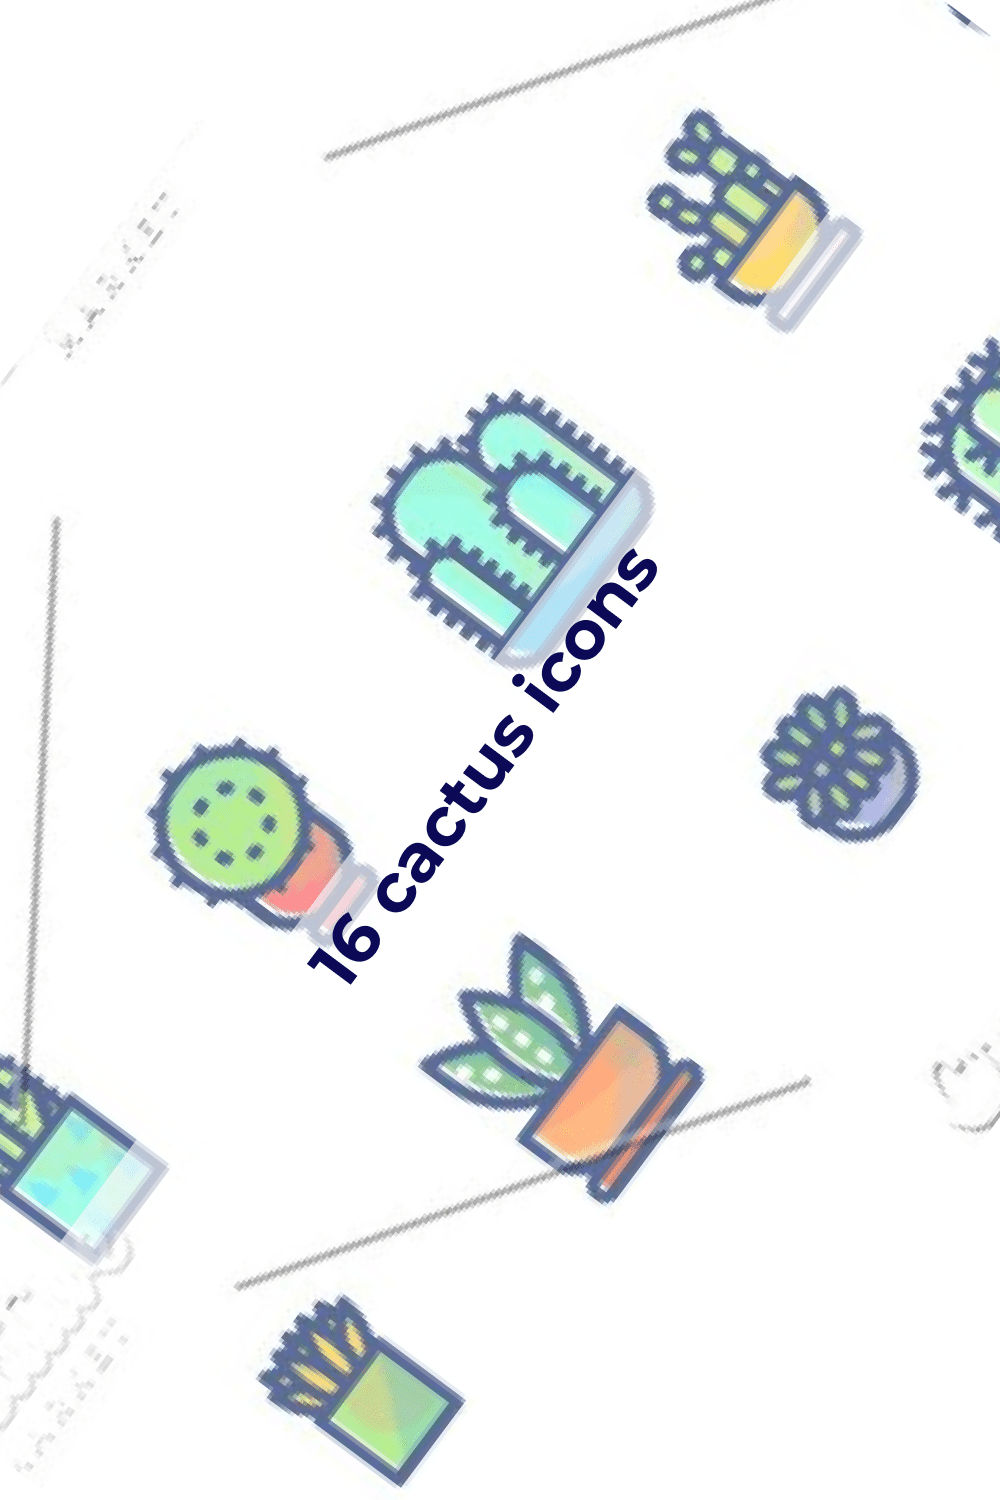 16 cactus icons Pinterest.